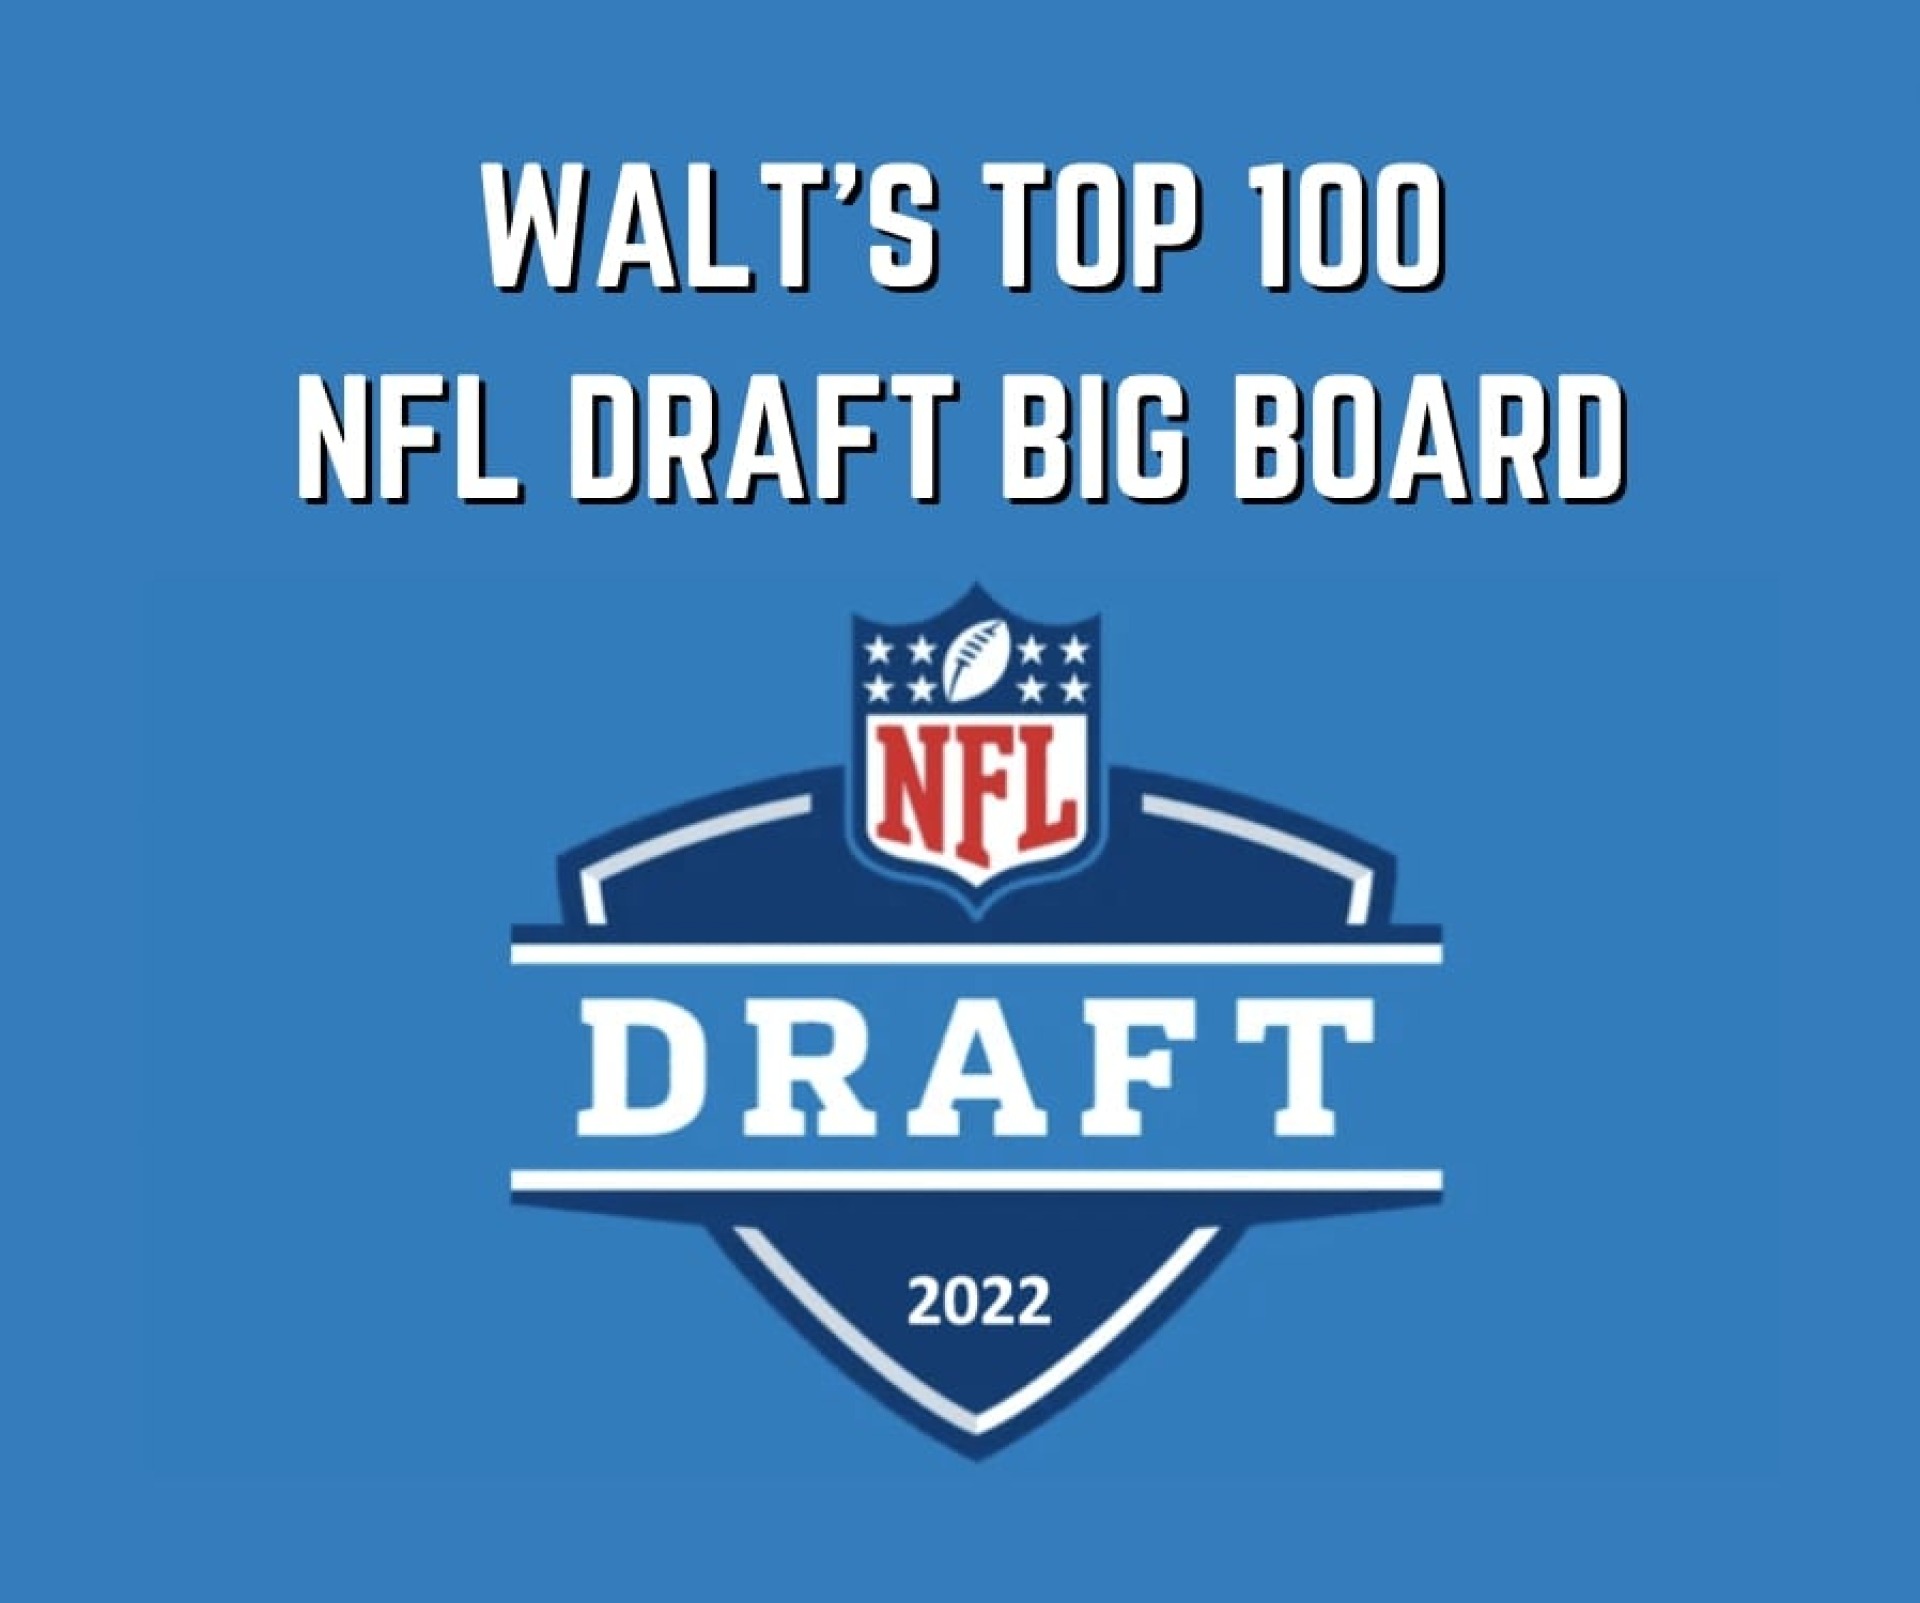 READ: Walt's FINAL Top 100 NFL Draft Big Board, The Roar Blog